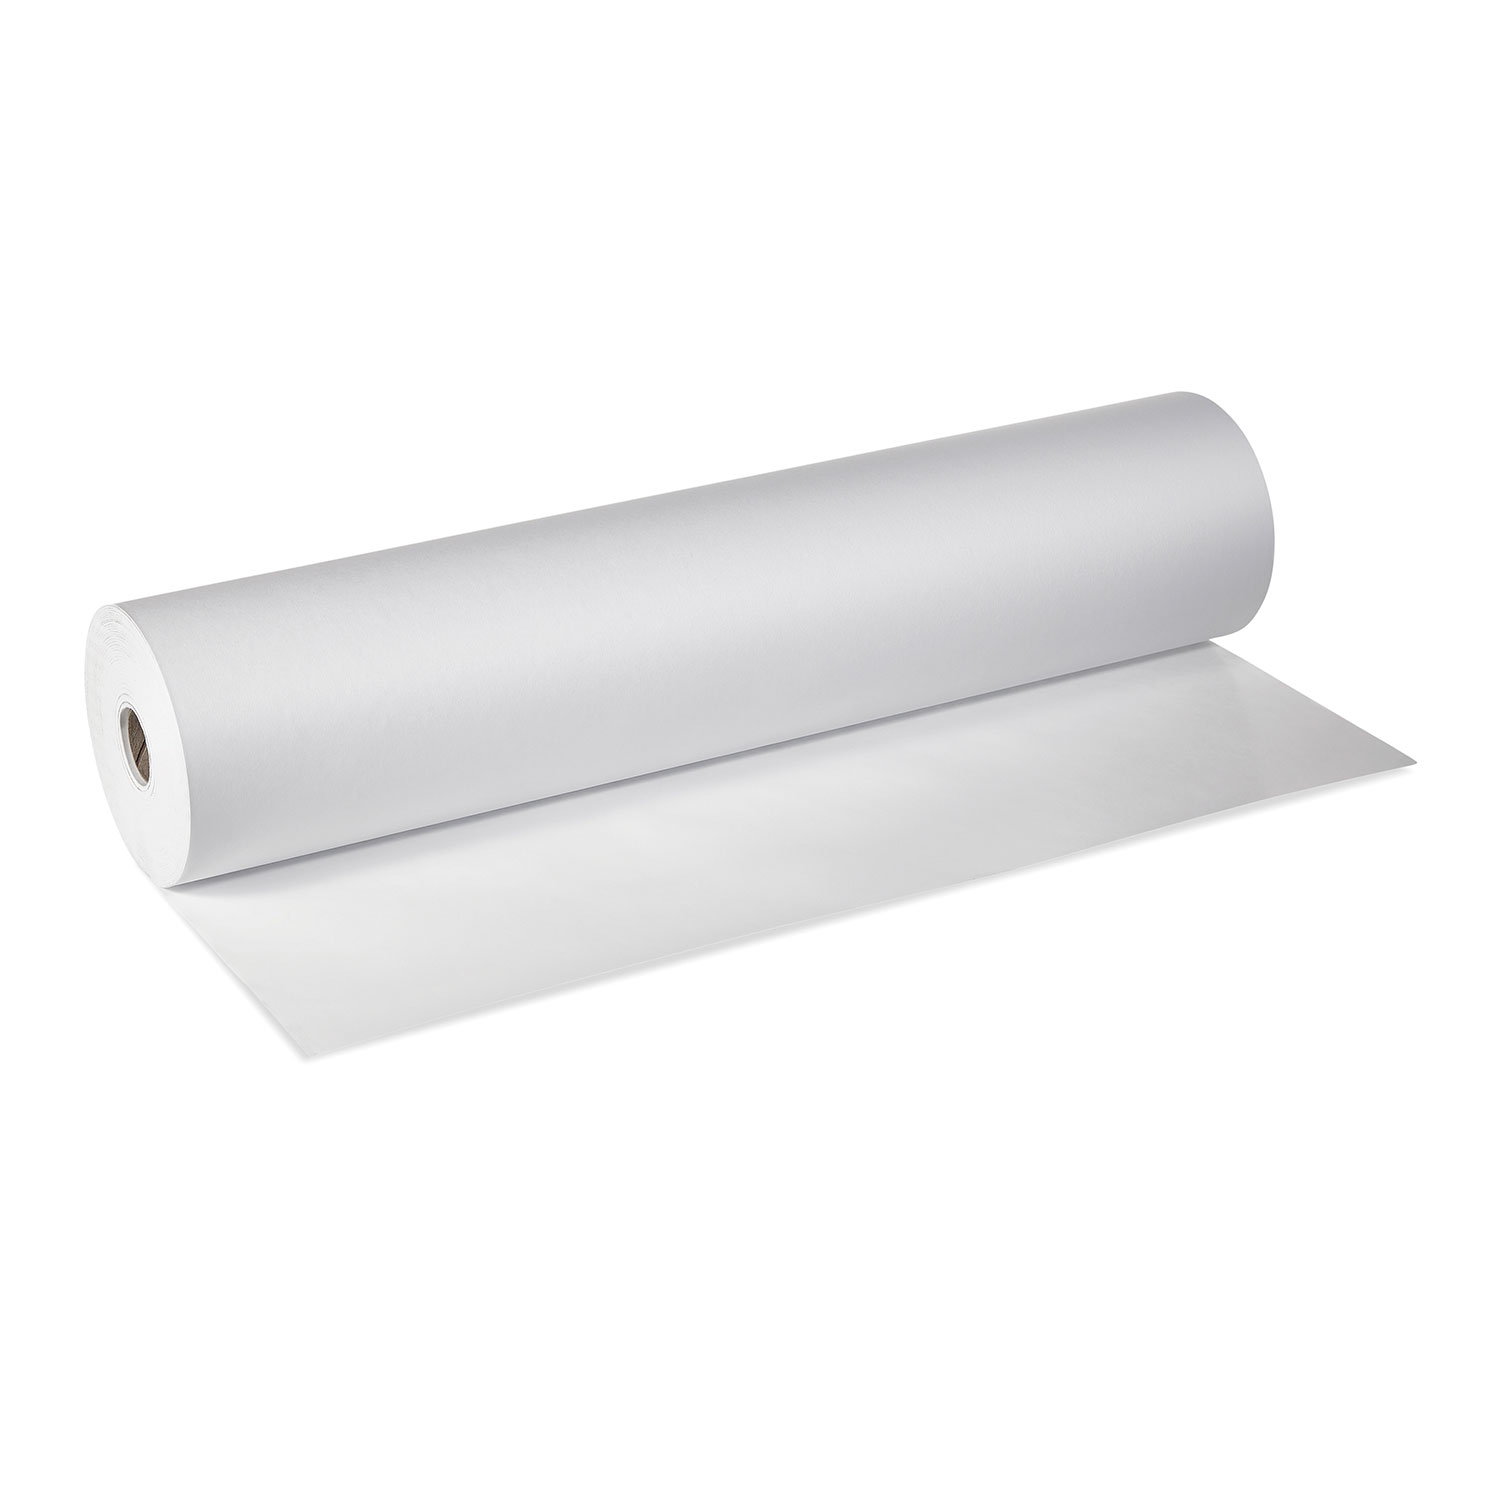 Weston® Heavy Duty Freezer Paper with Cutter Box, 18 in x 300 ft Roll (83-4001-W)